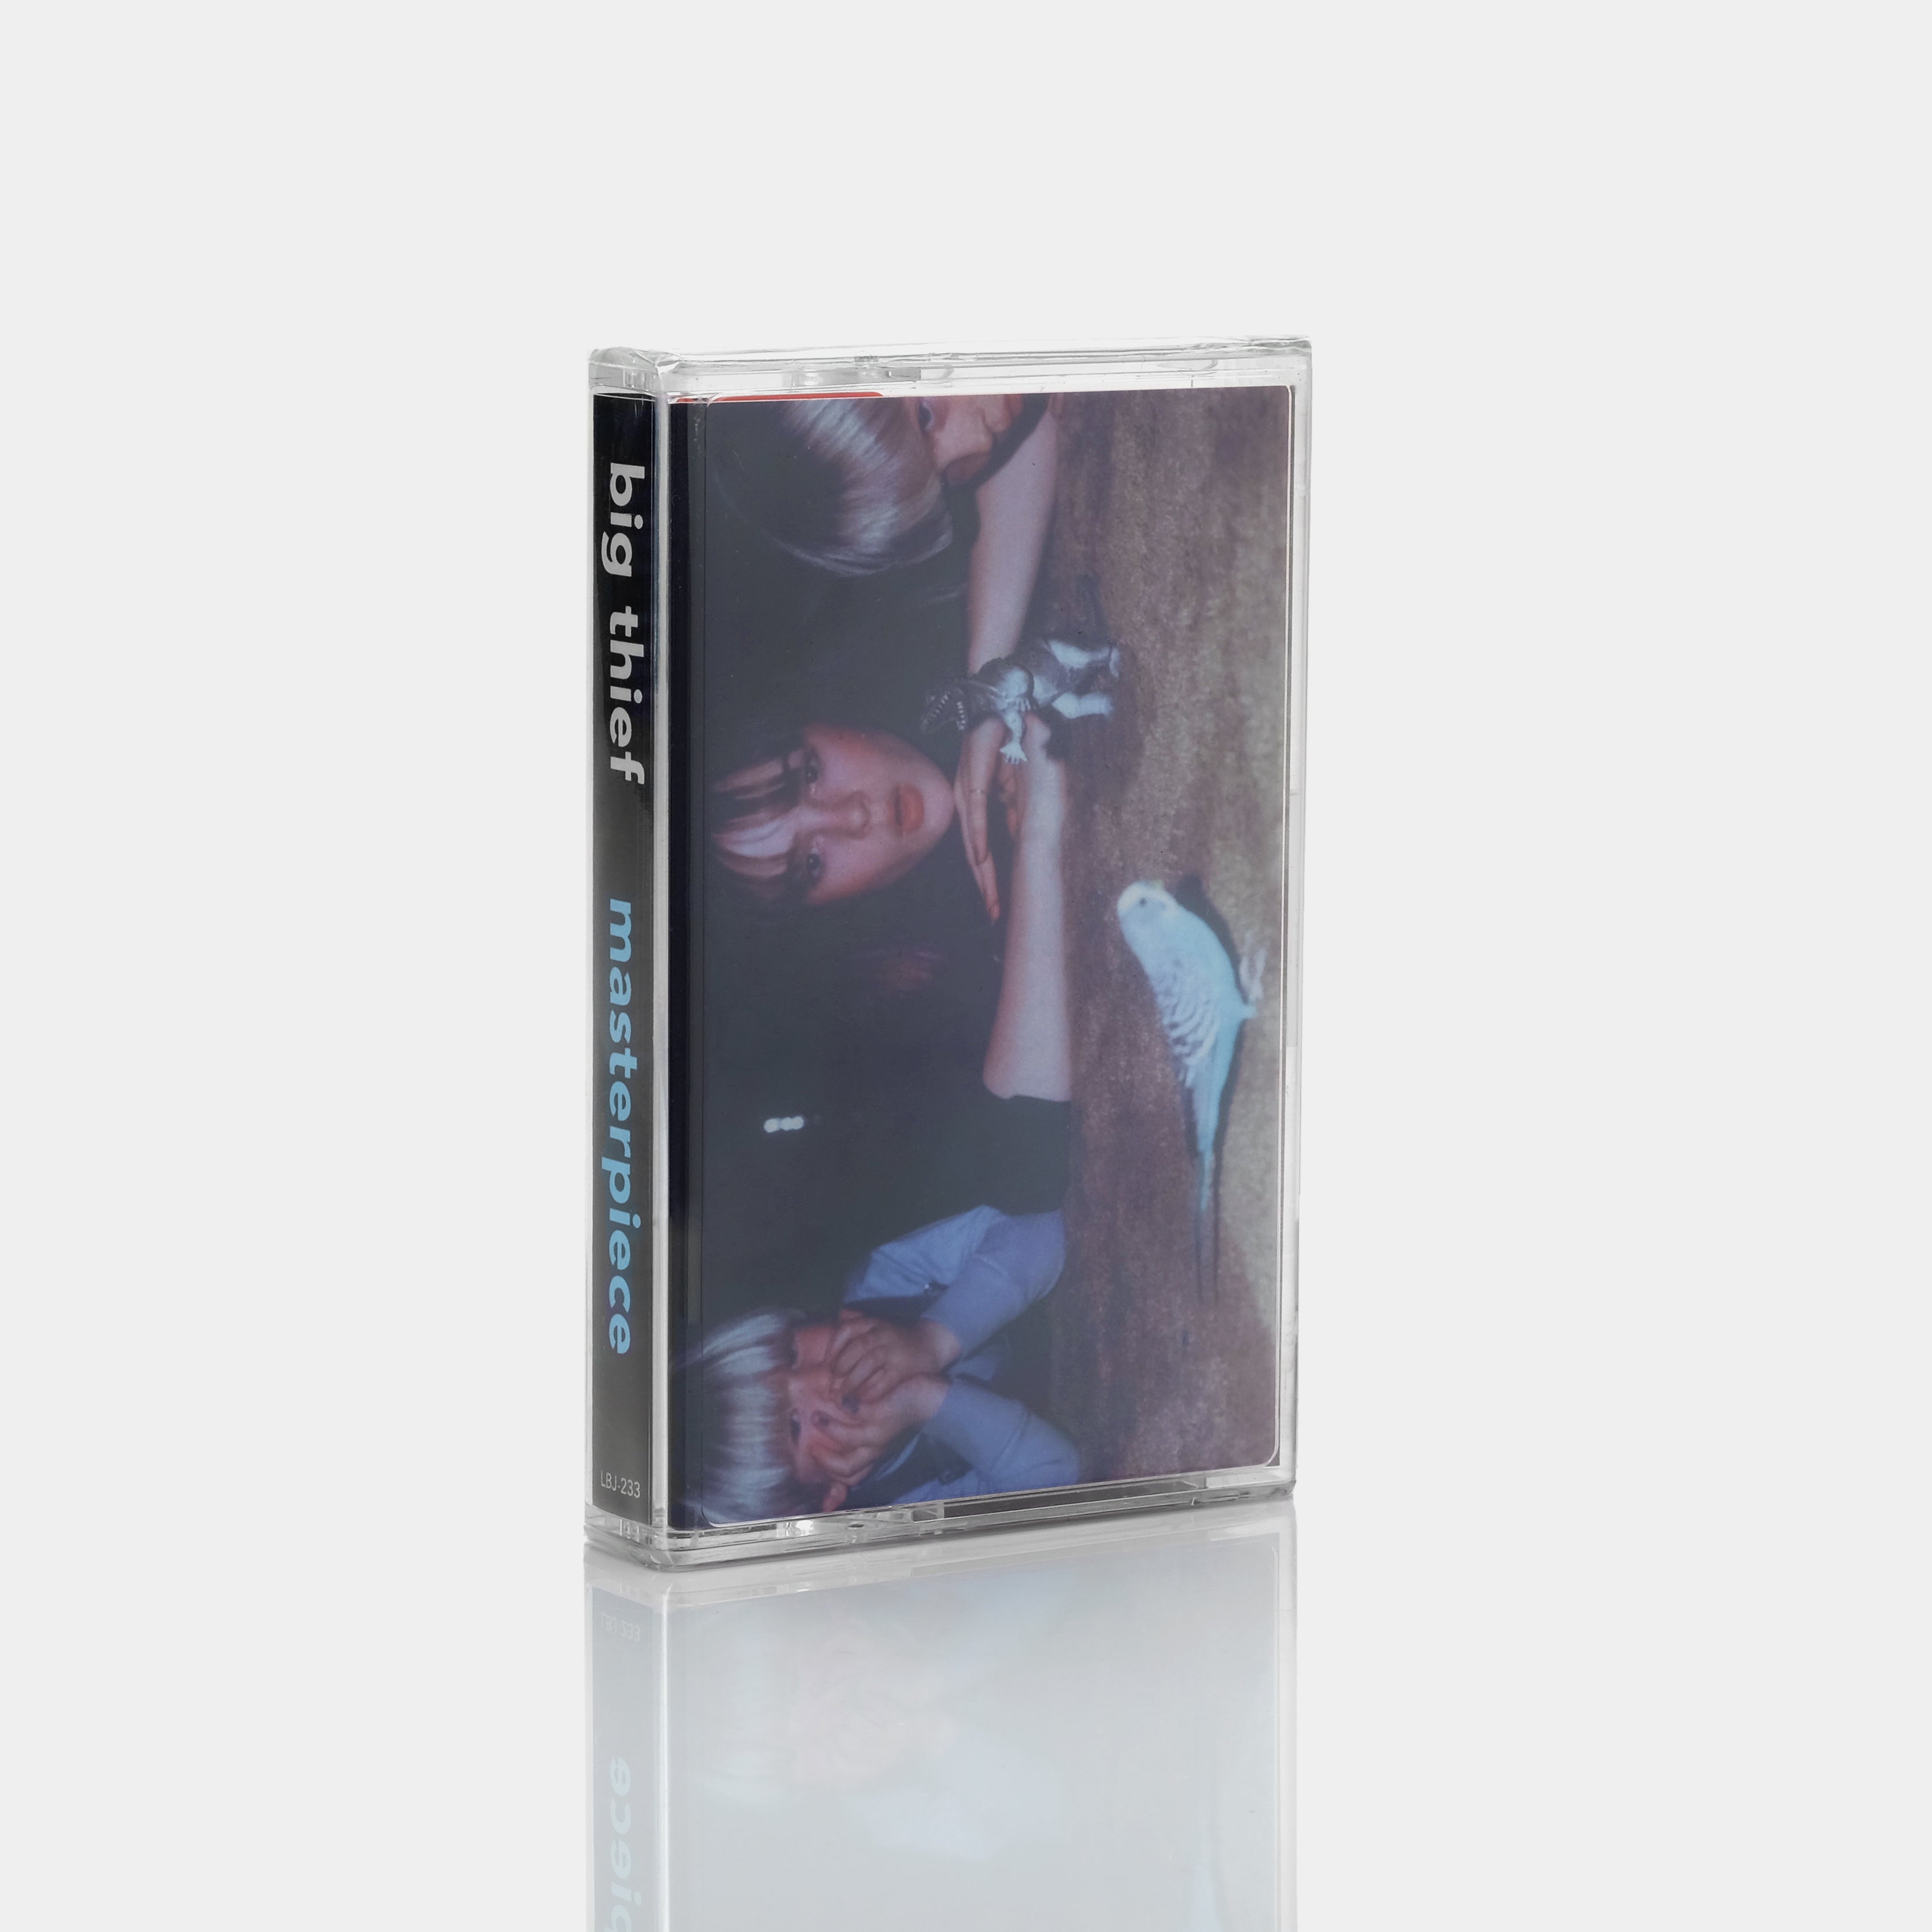 Big Thief - Masterpiece Cassette Tape